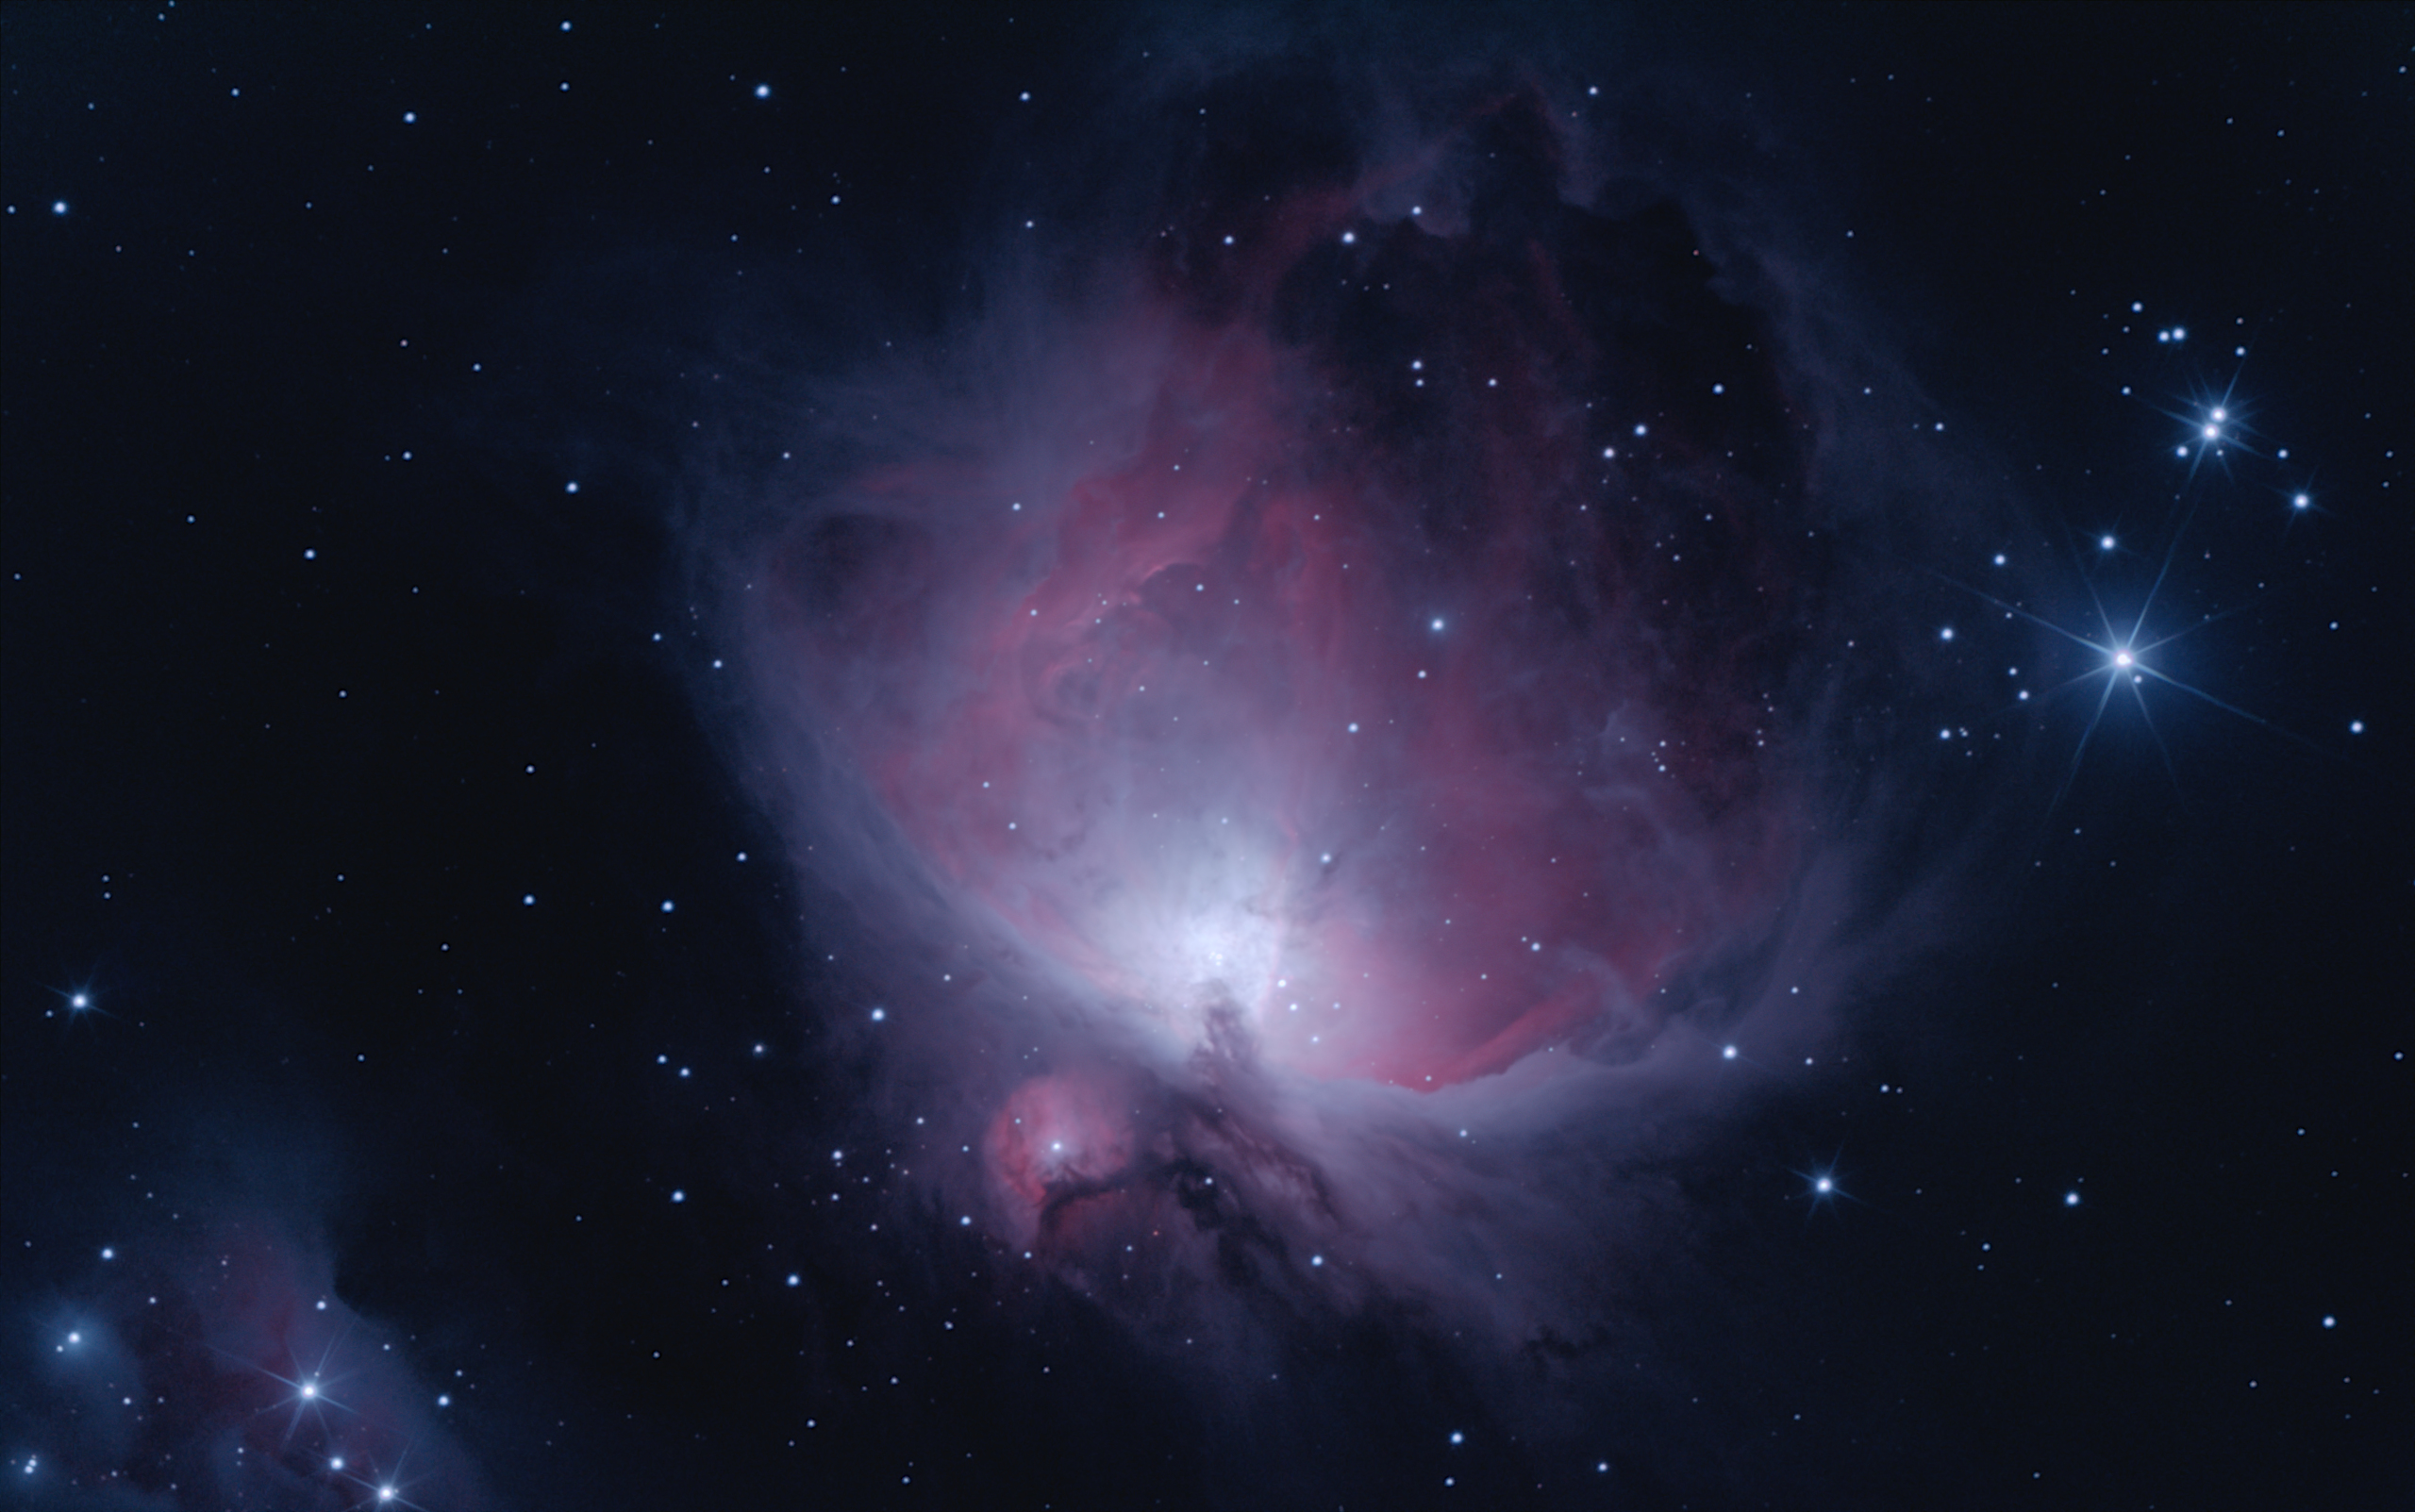 image from Orion Nebula